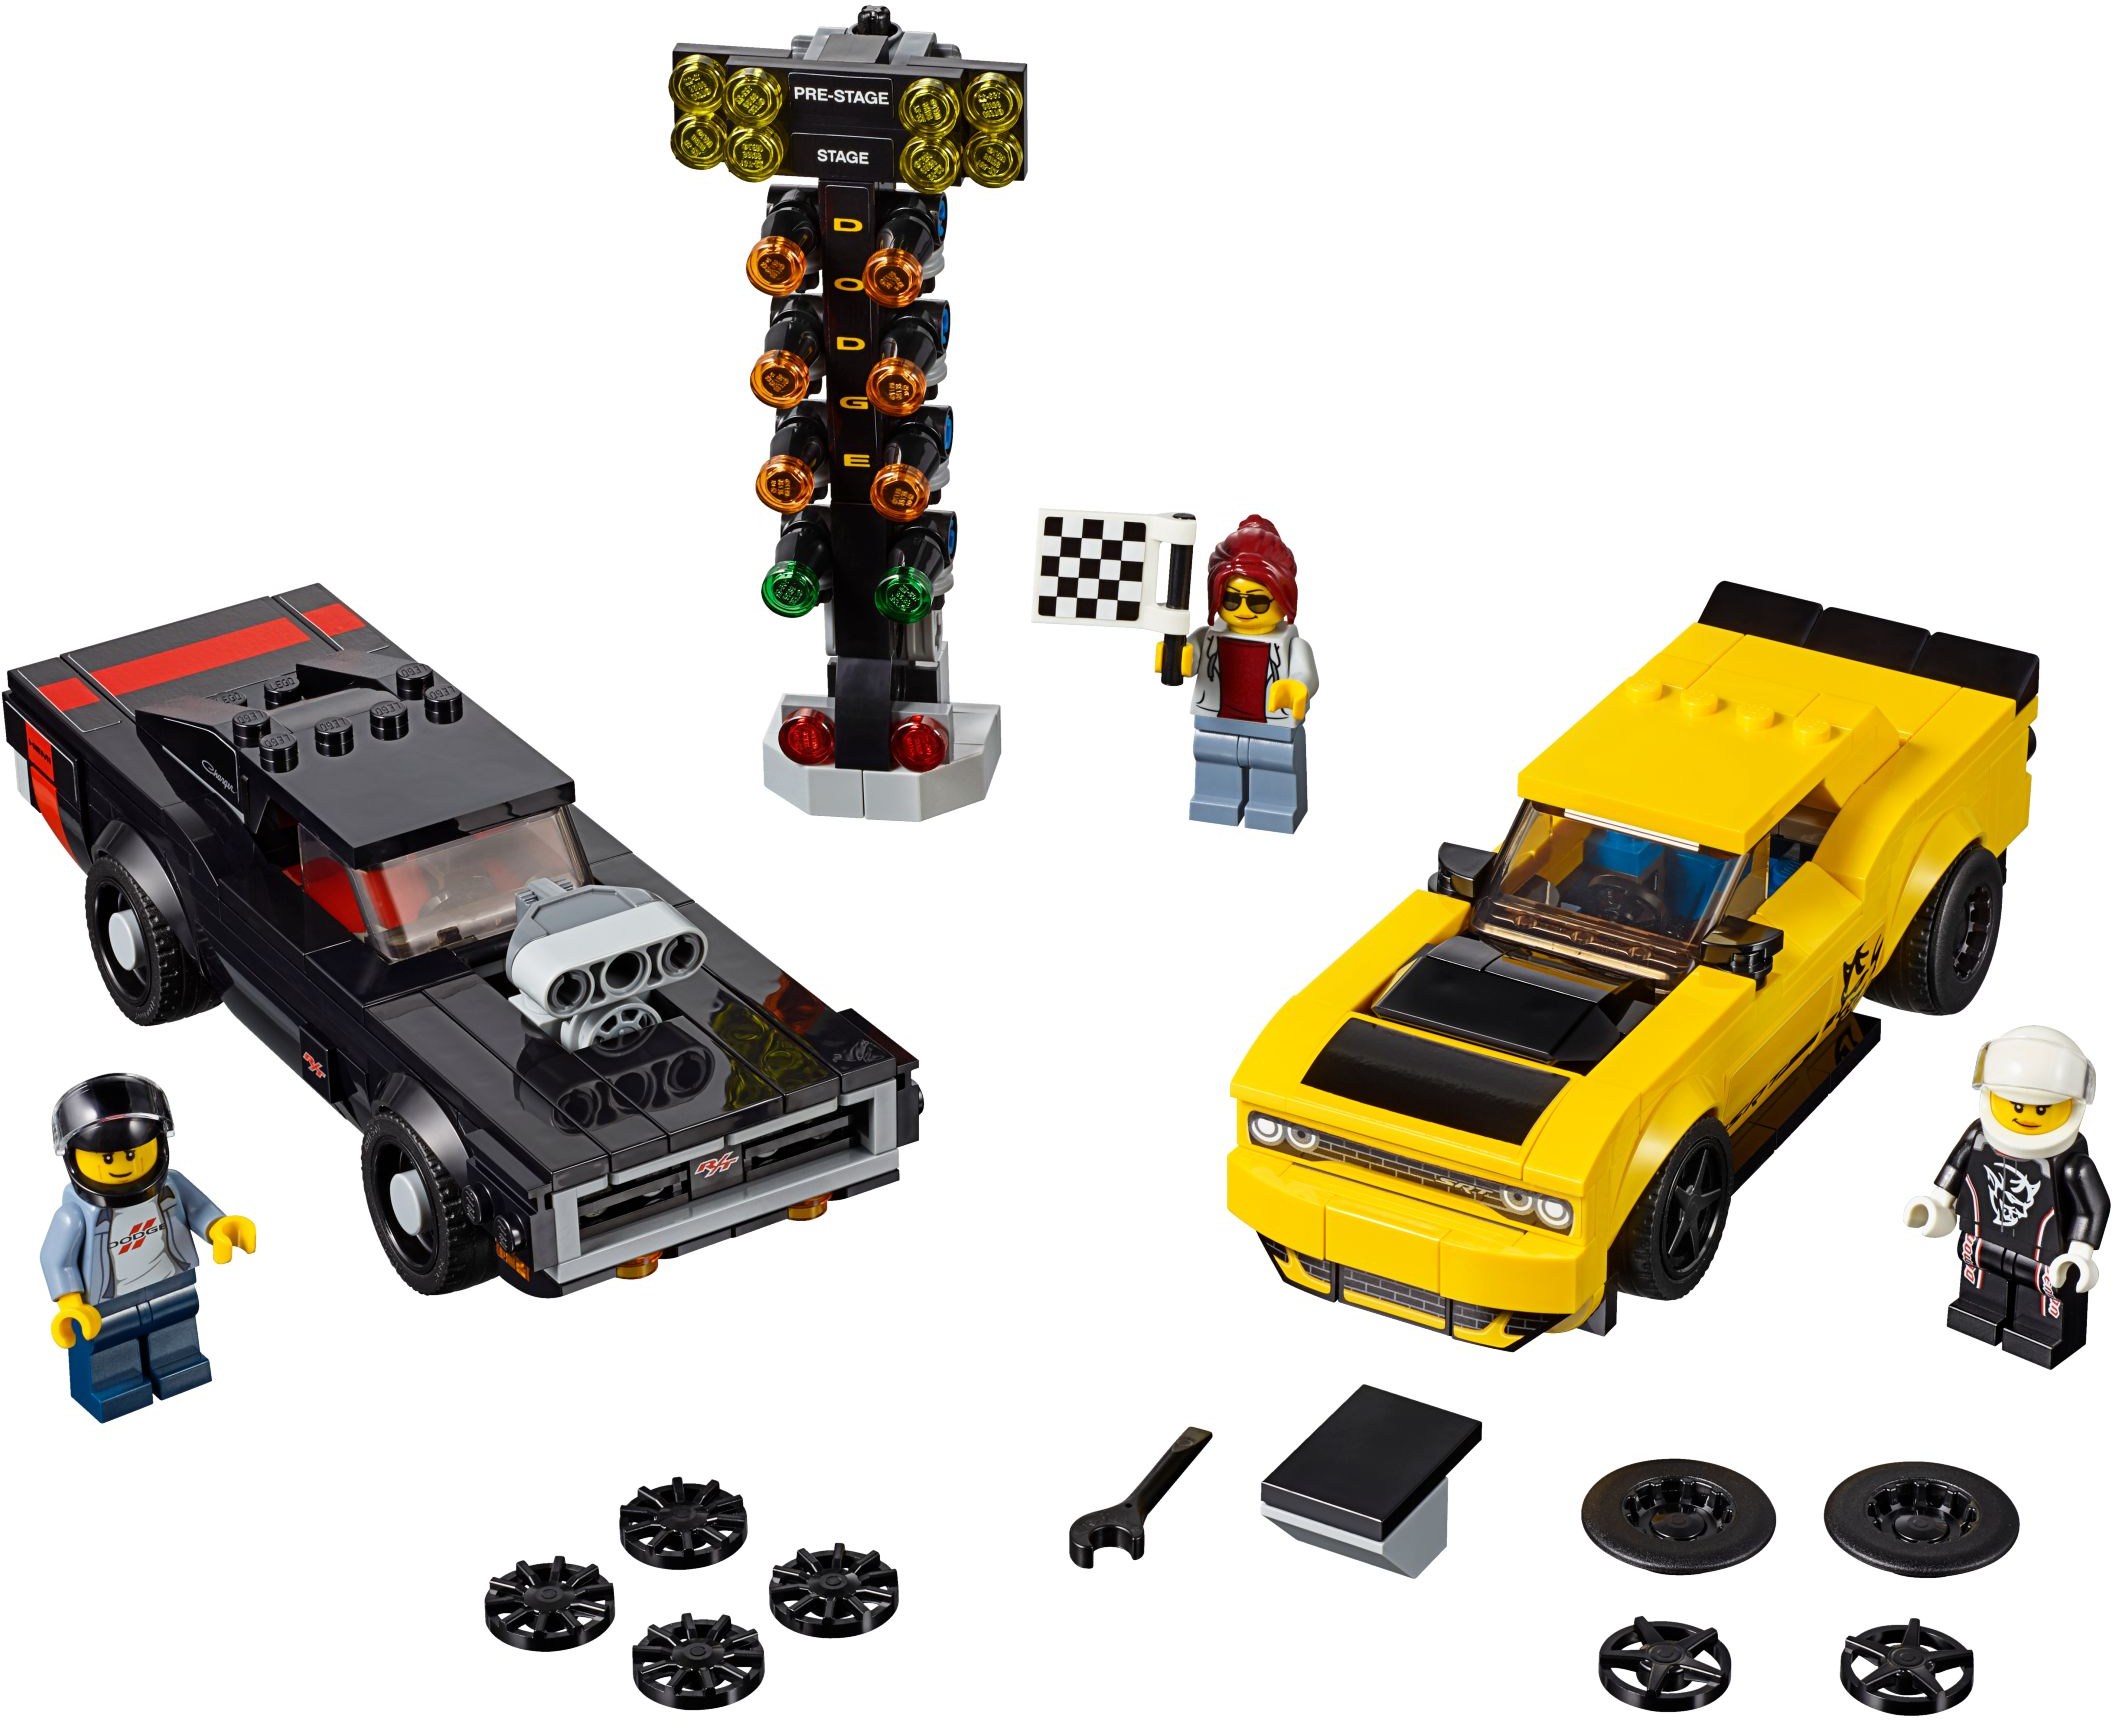 zebra Taxpayer gave Speed Champions | 2019 | Brickset: LEGO set guide and database